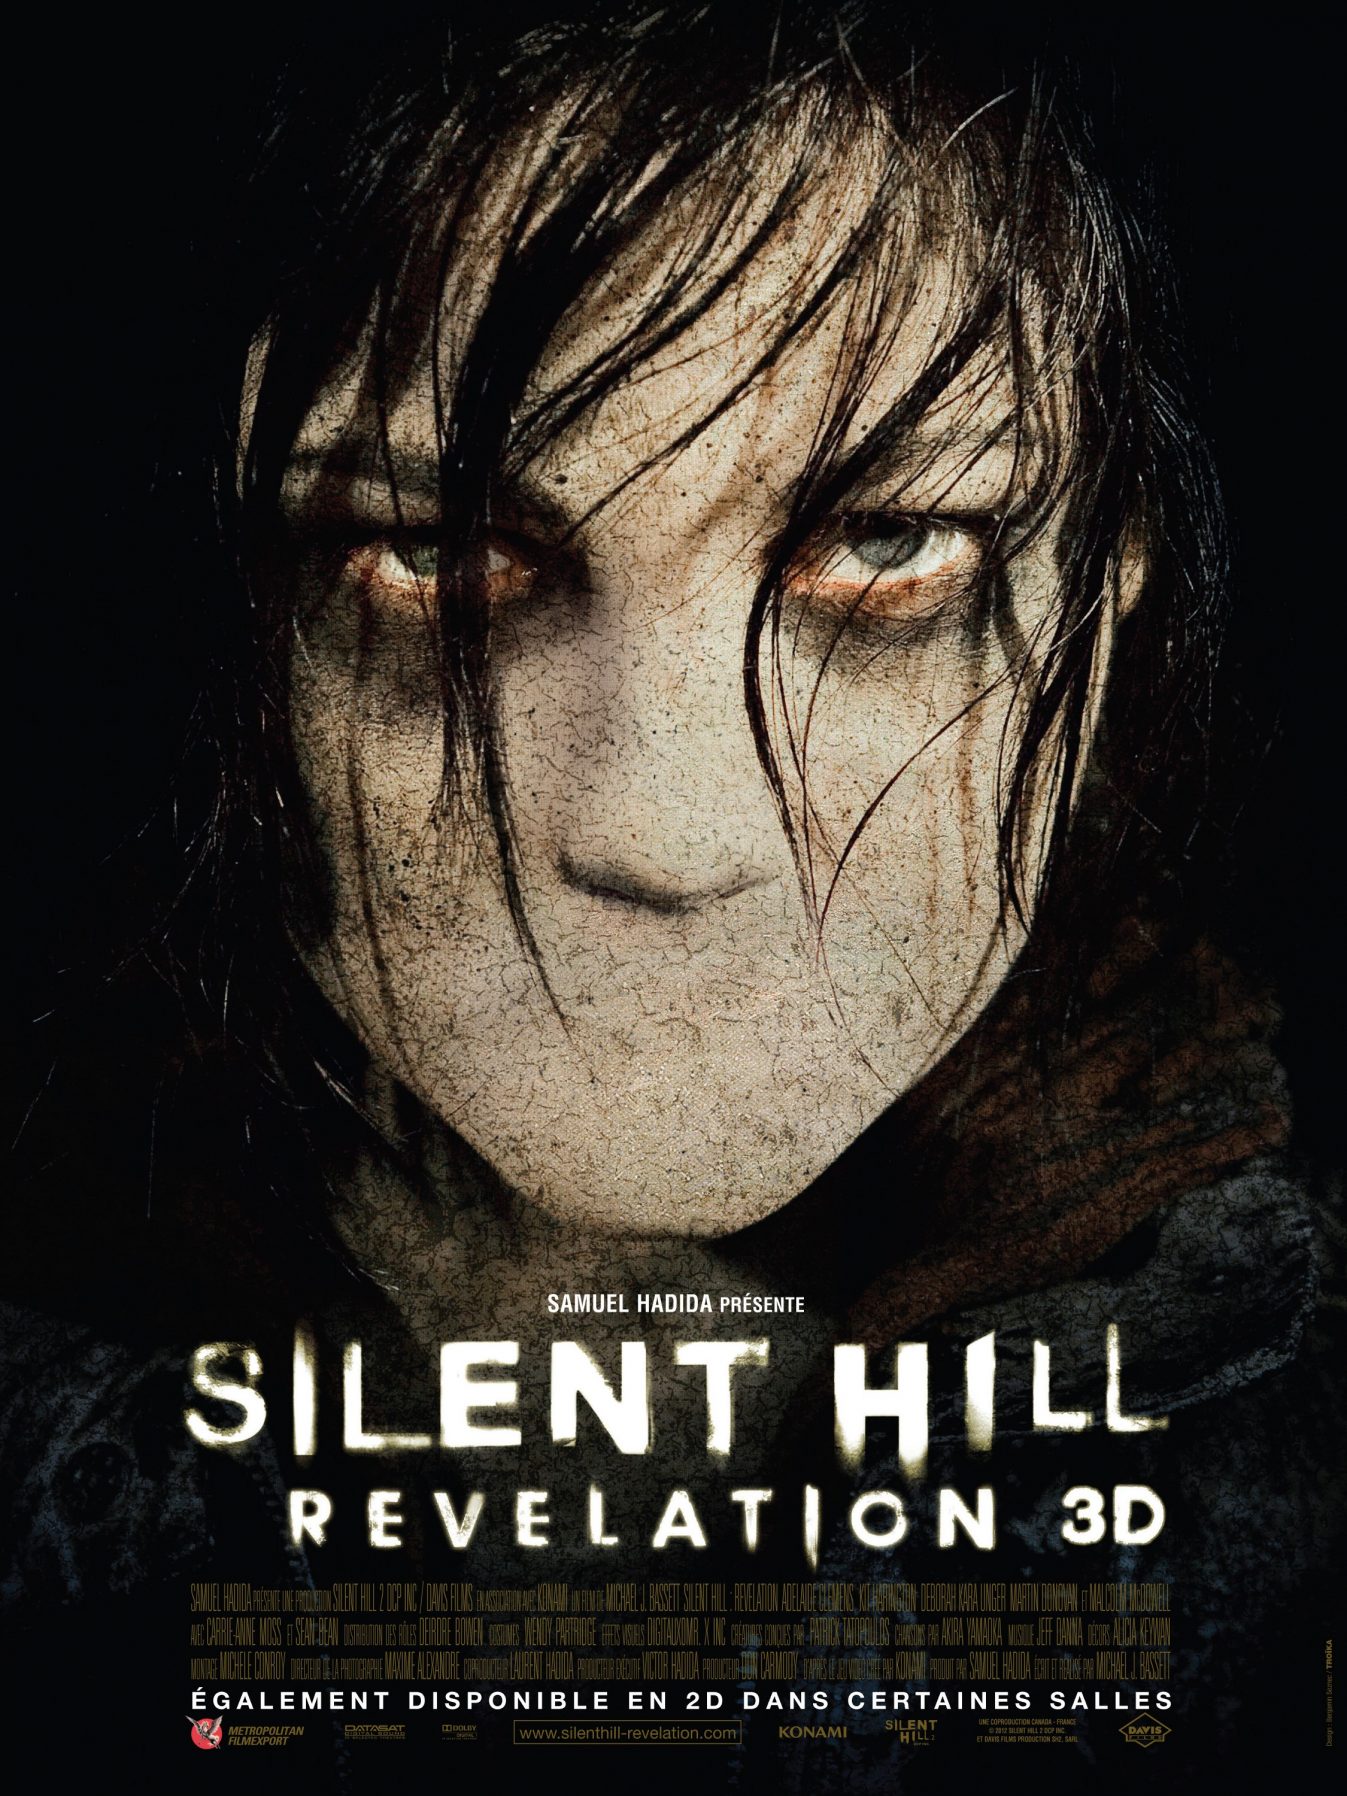 Silent Hill Revelation 3D en Blu-Ray et DVD le 28 mars 2013